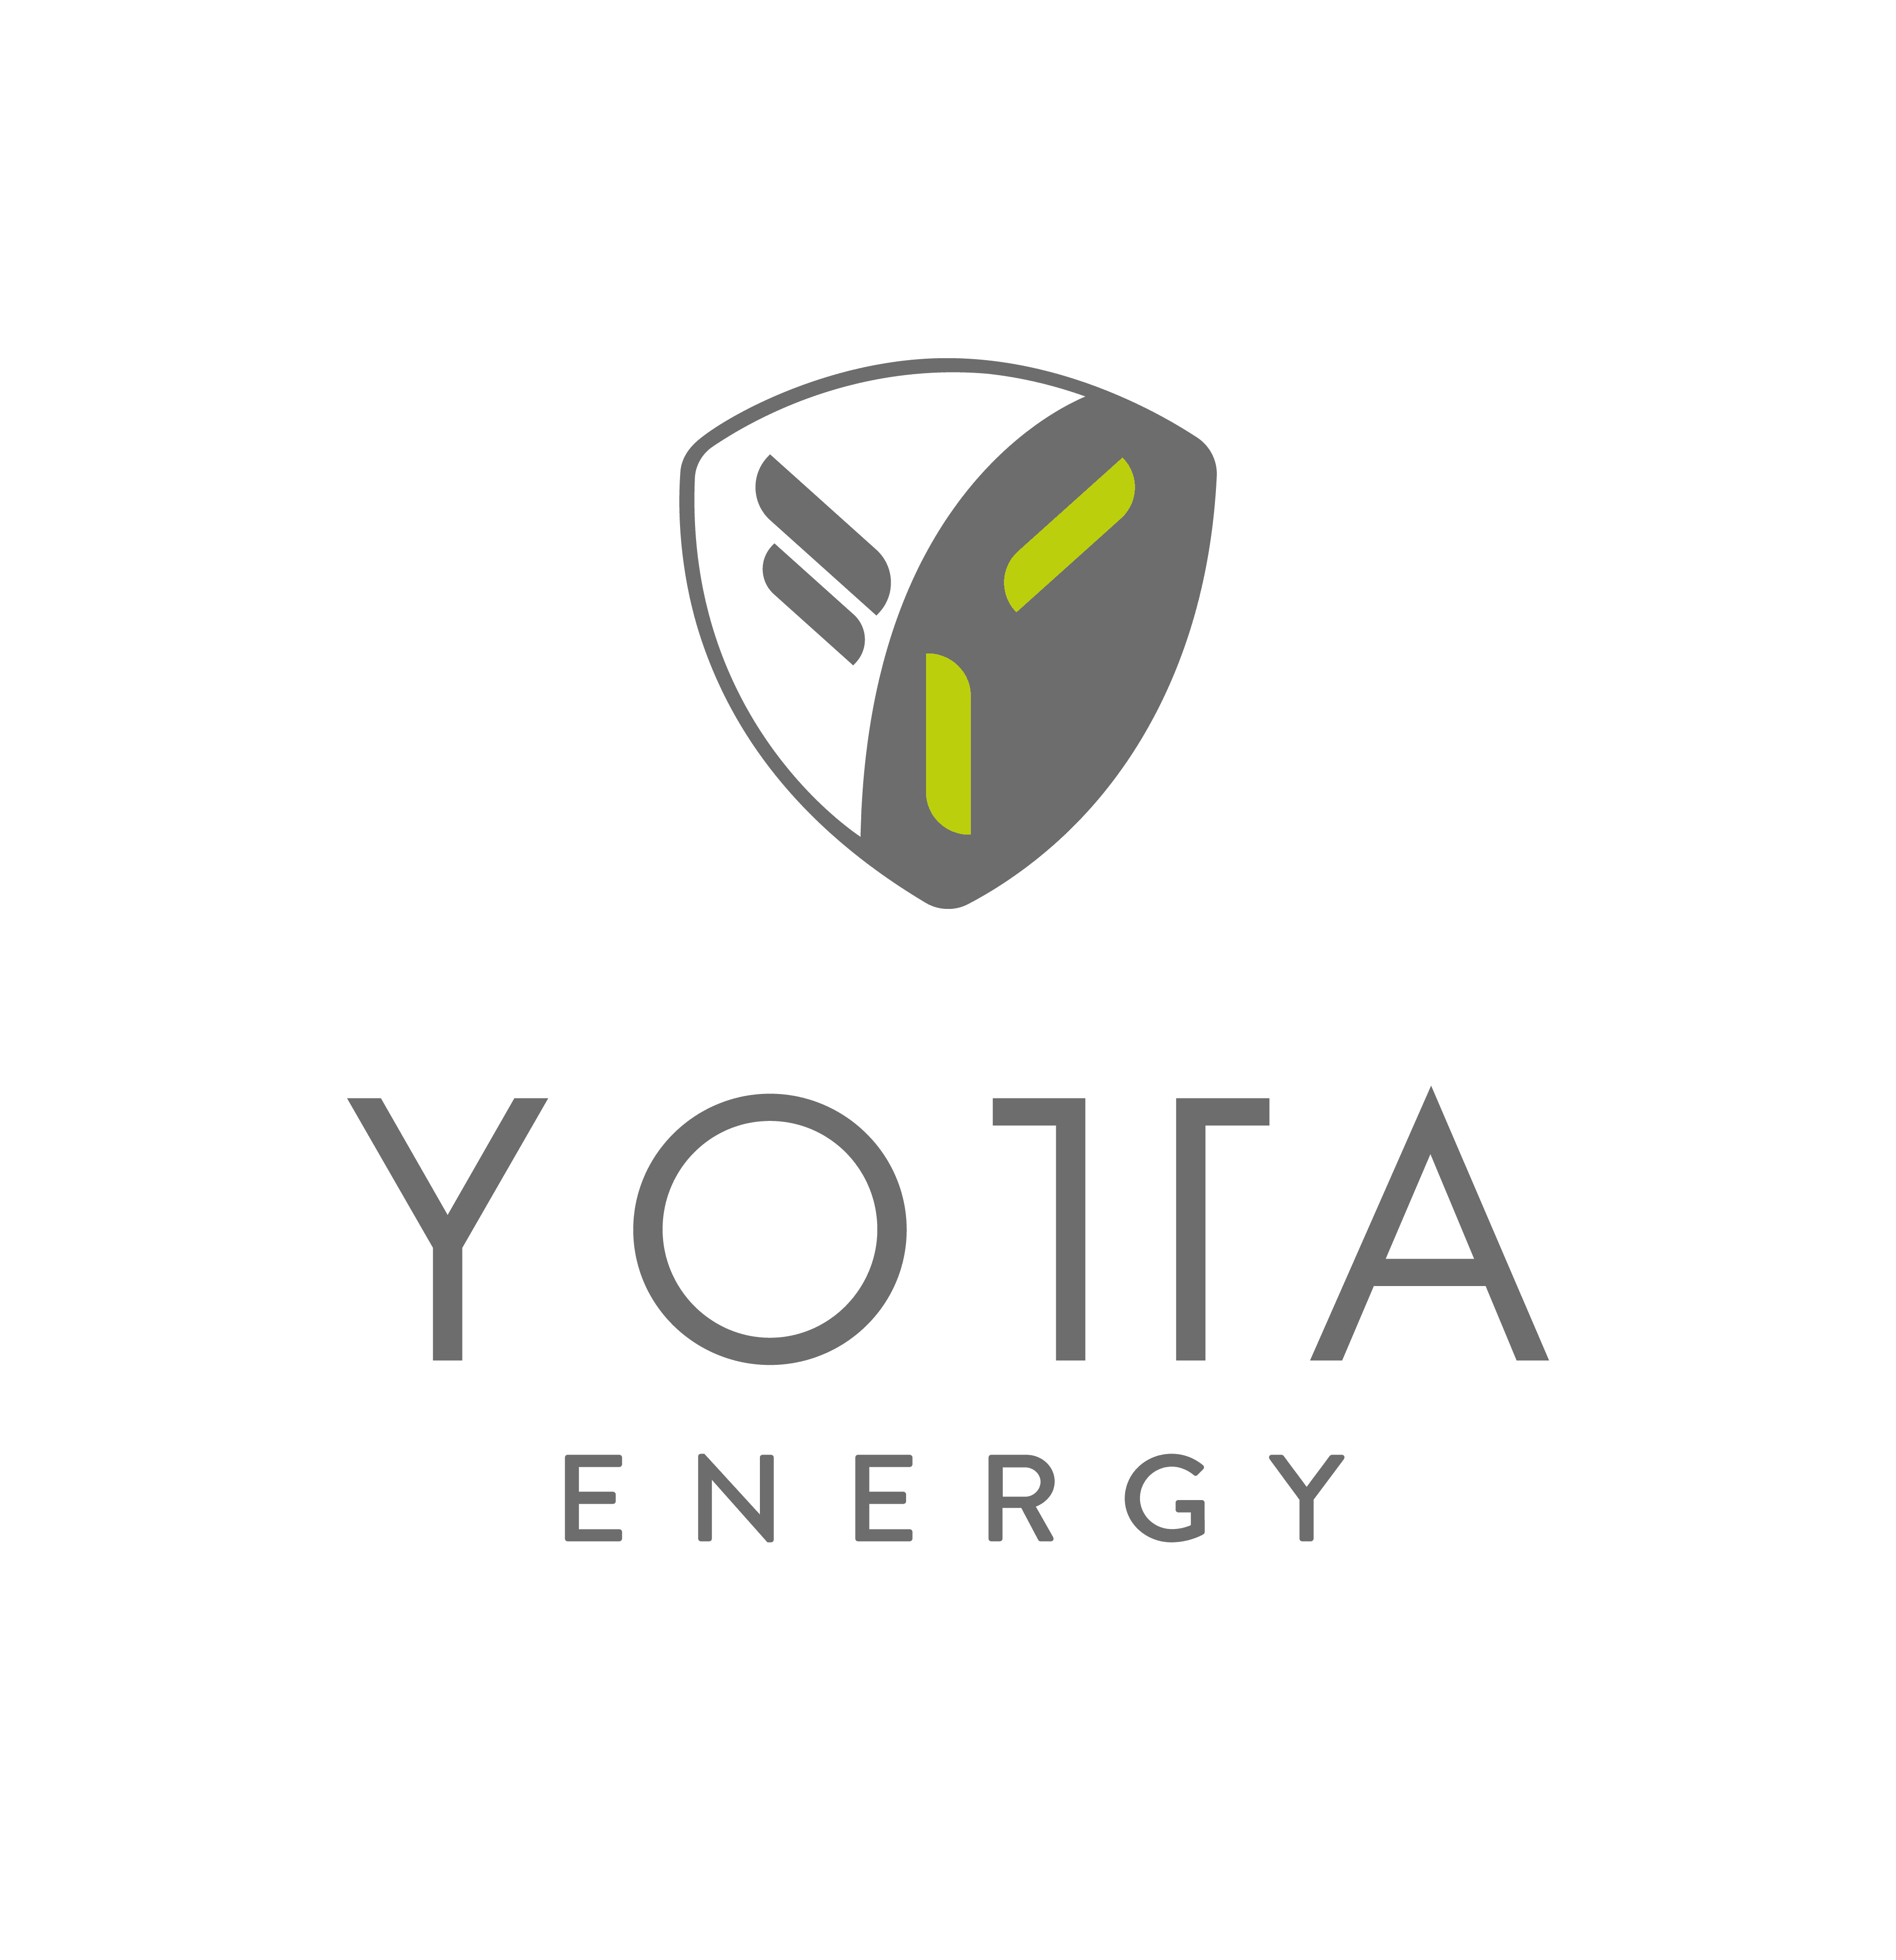 Yotta Energy logo